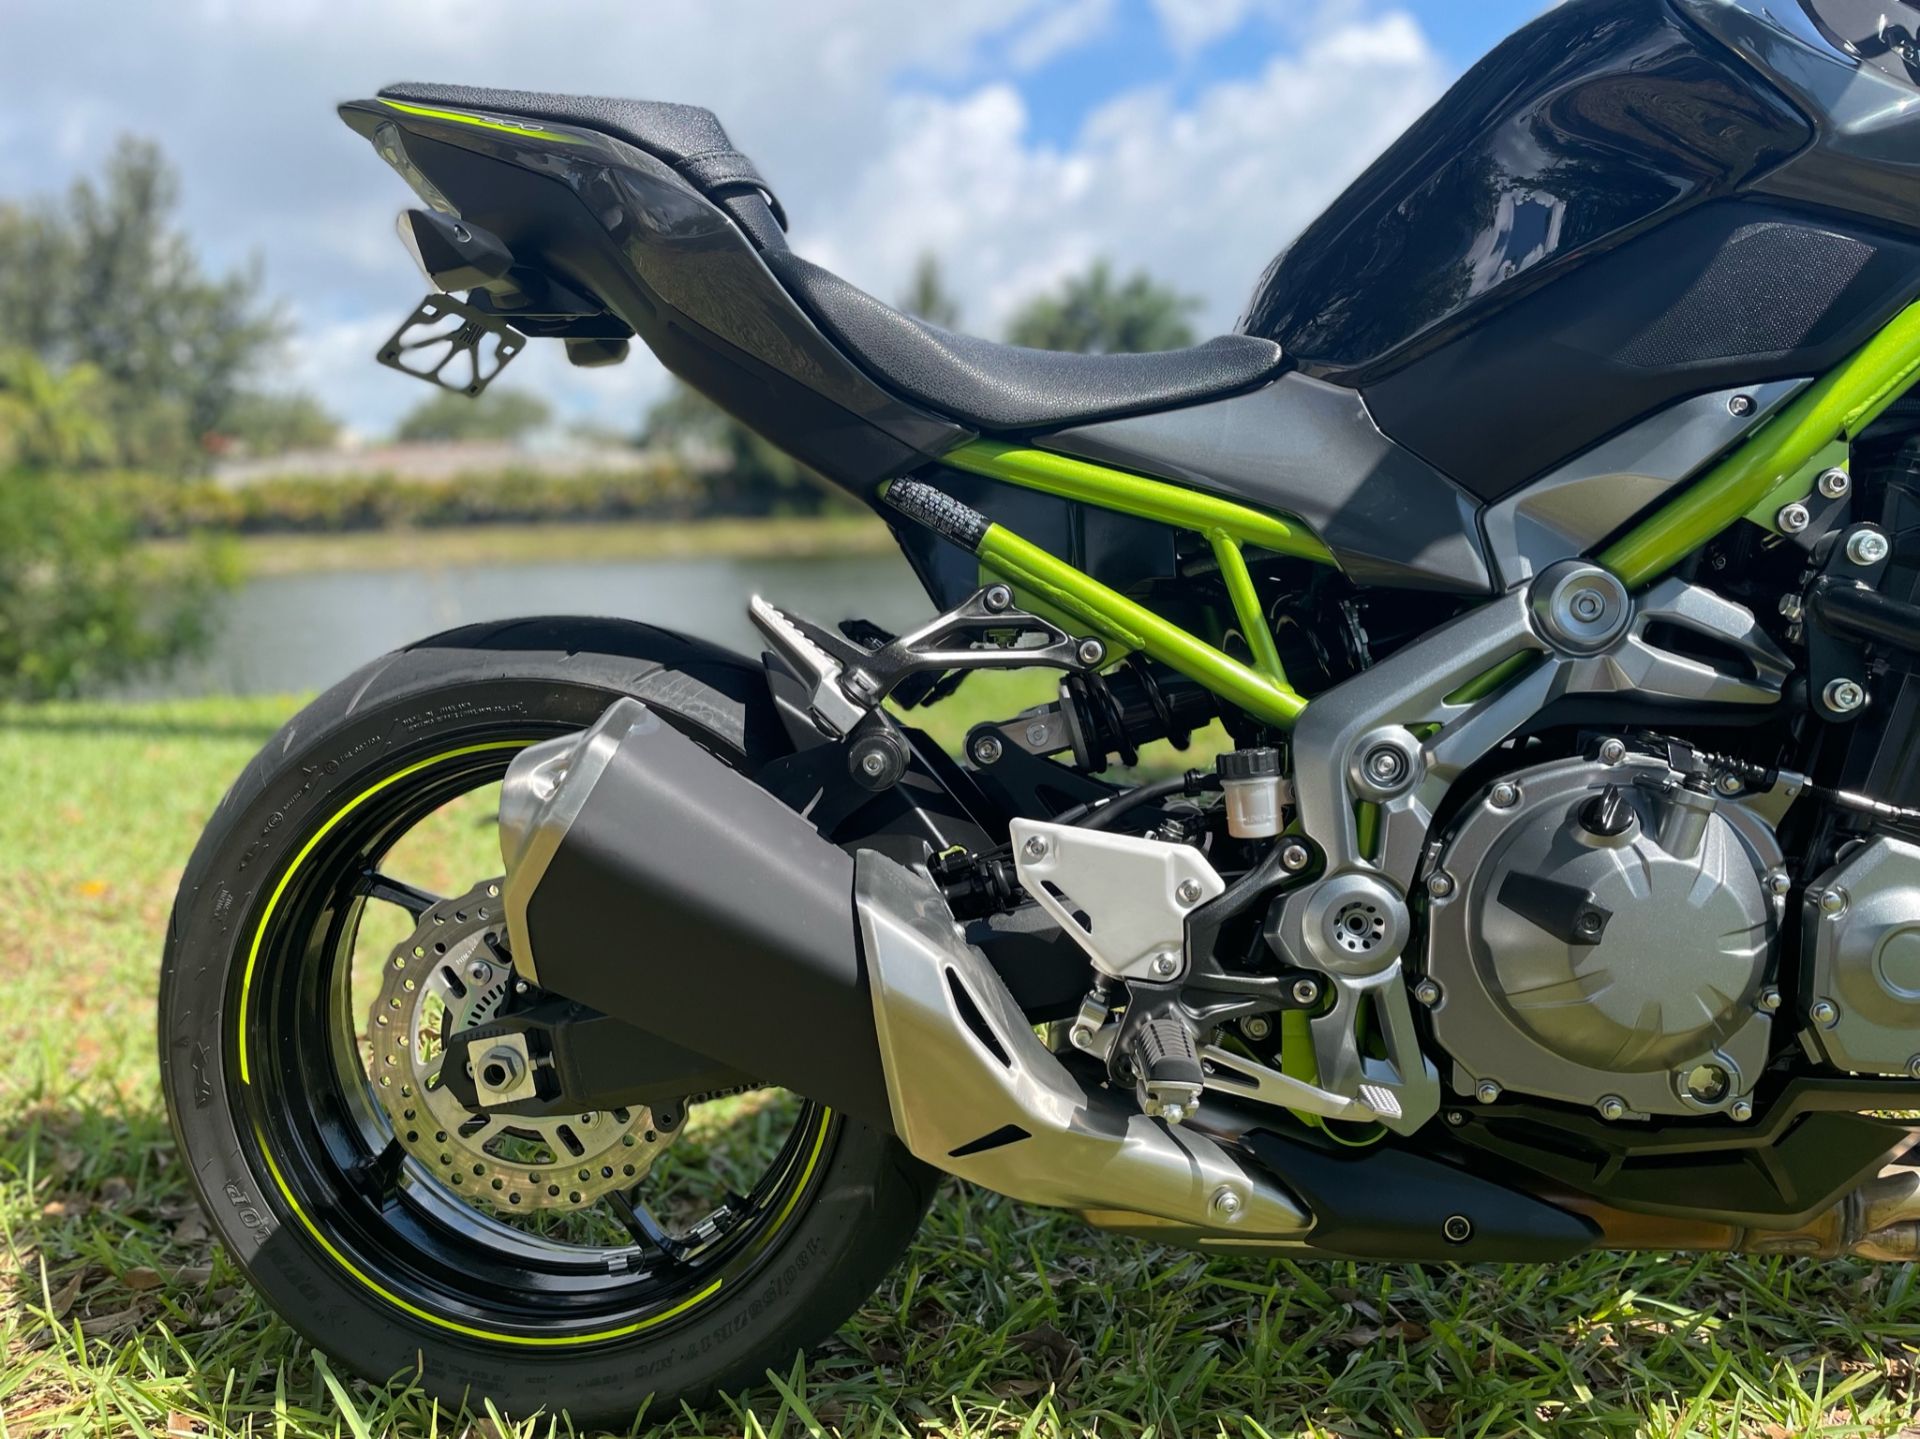 2017 Kawasaki Z900 ABS in North Miami Beach, Florida - Photo 4